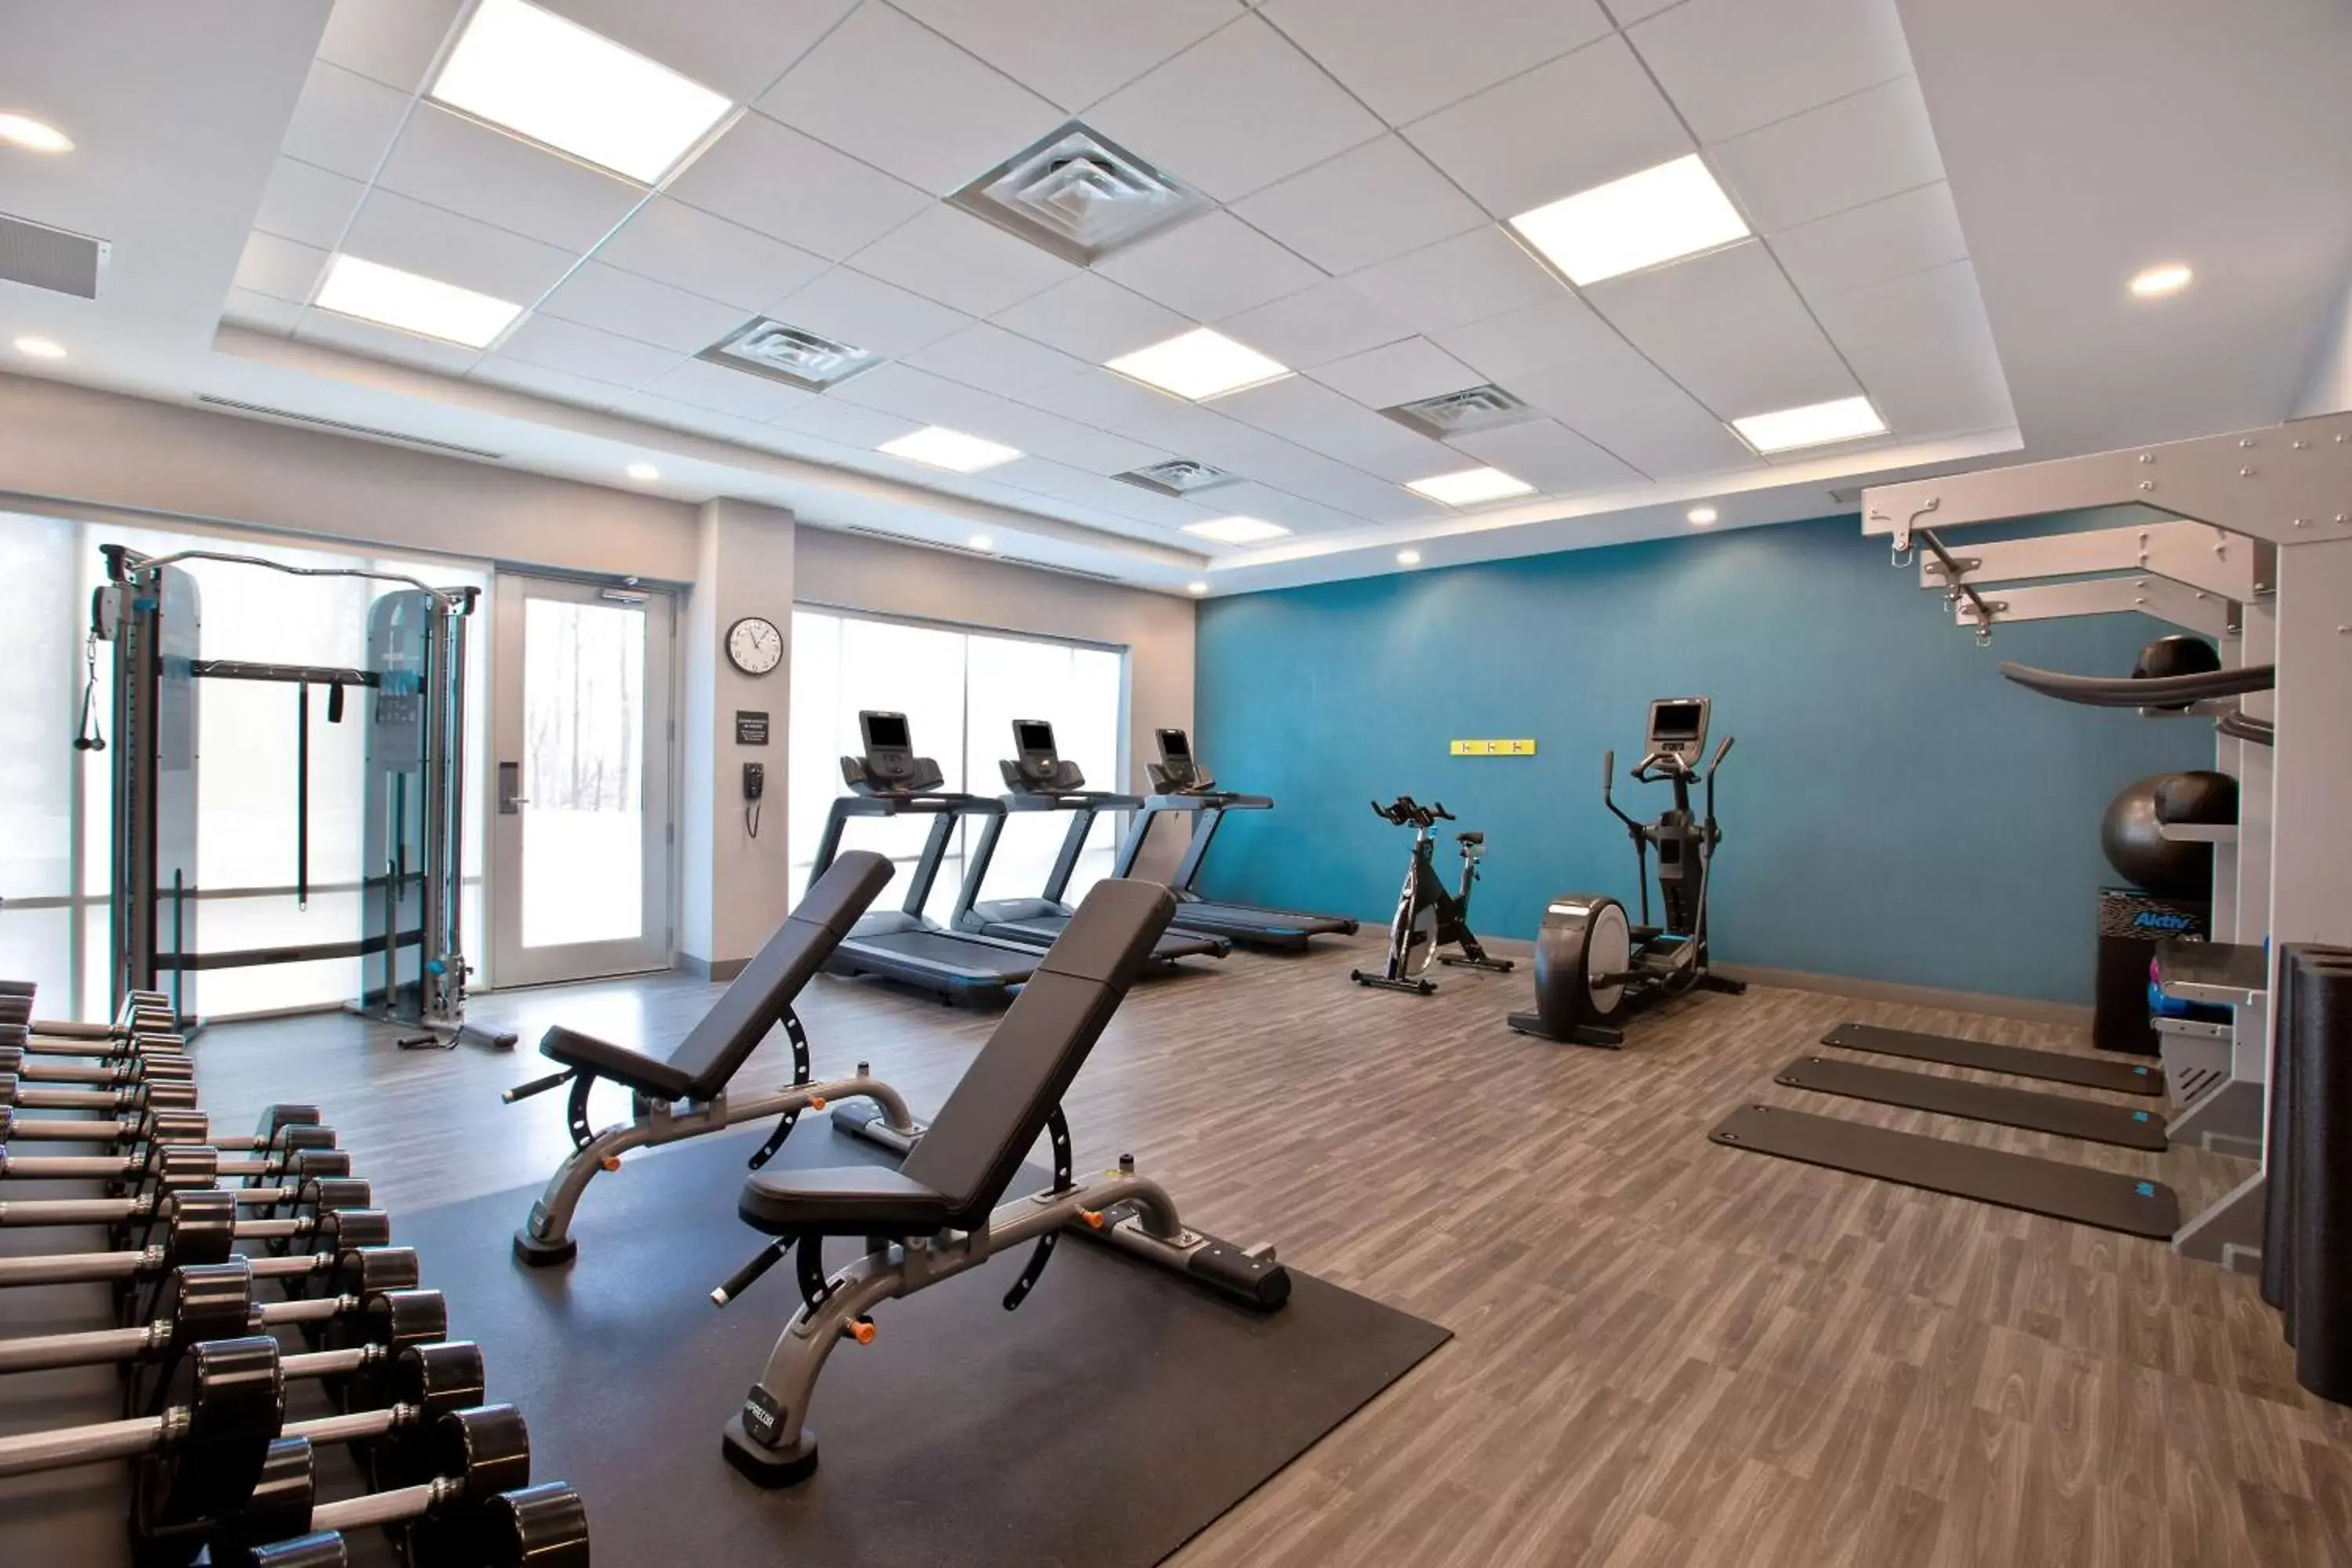 Fitness centre/facilities, Fitness Center/Facilities in Hampton Inn & Suites Ottawa West, Ontario, Canada